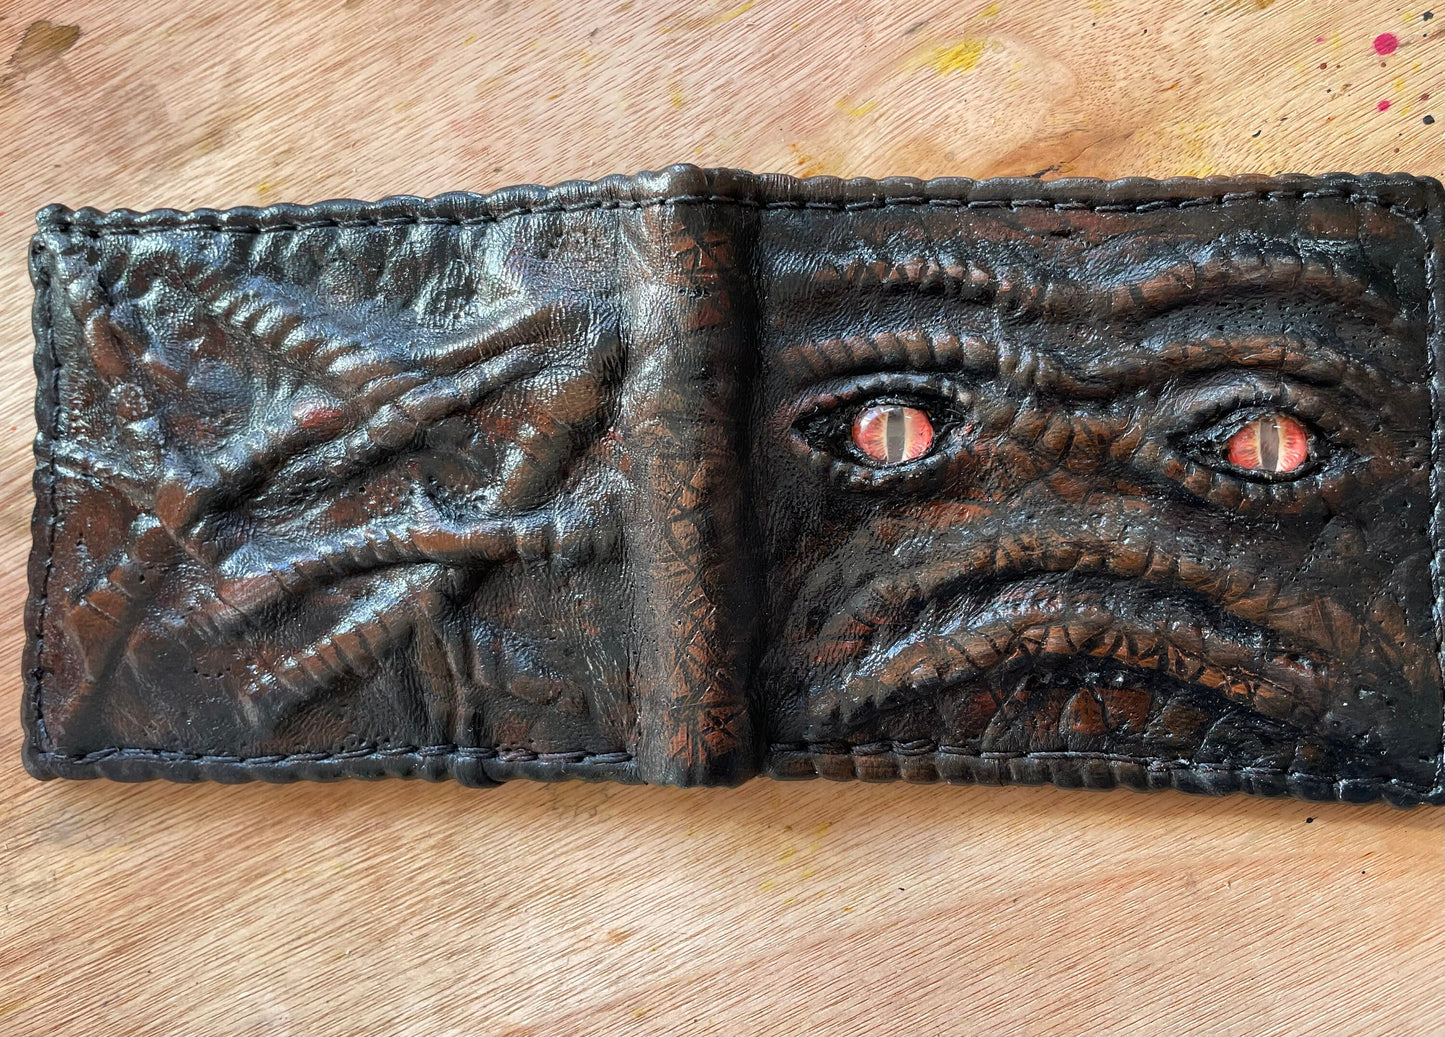 Enderman Eyes bumpy version - Necromonicon - demon eyes - Leather wallet.